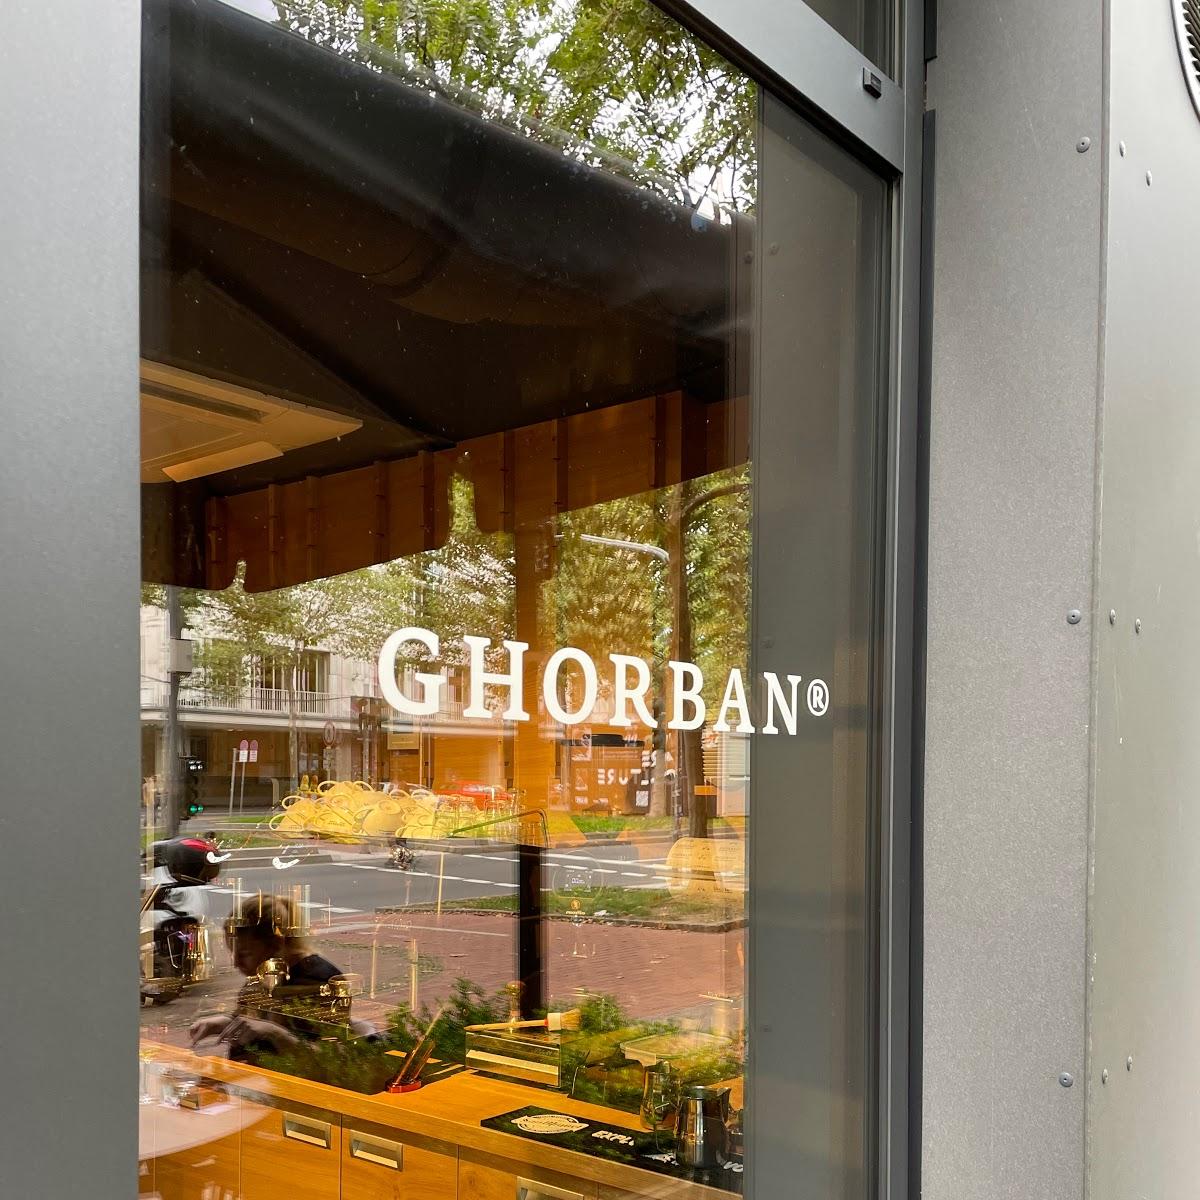 Restaurant "Ghorban Delikatessen Manufaktur" in Düsseldorf